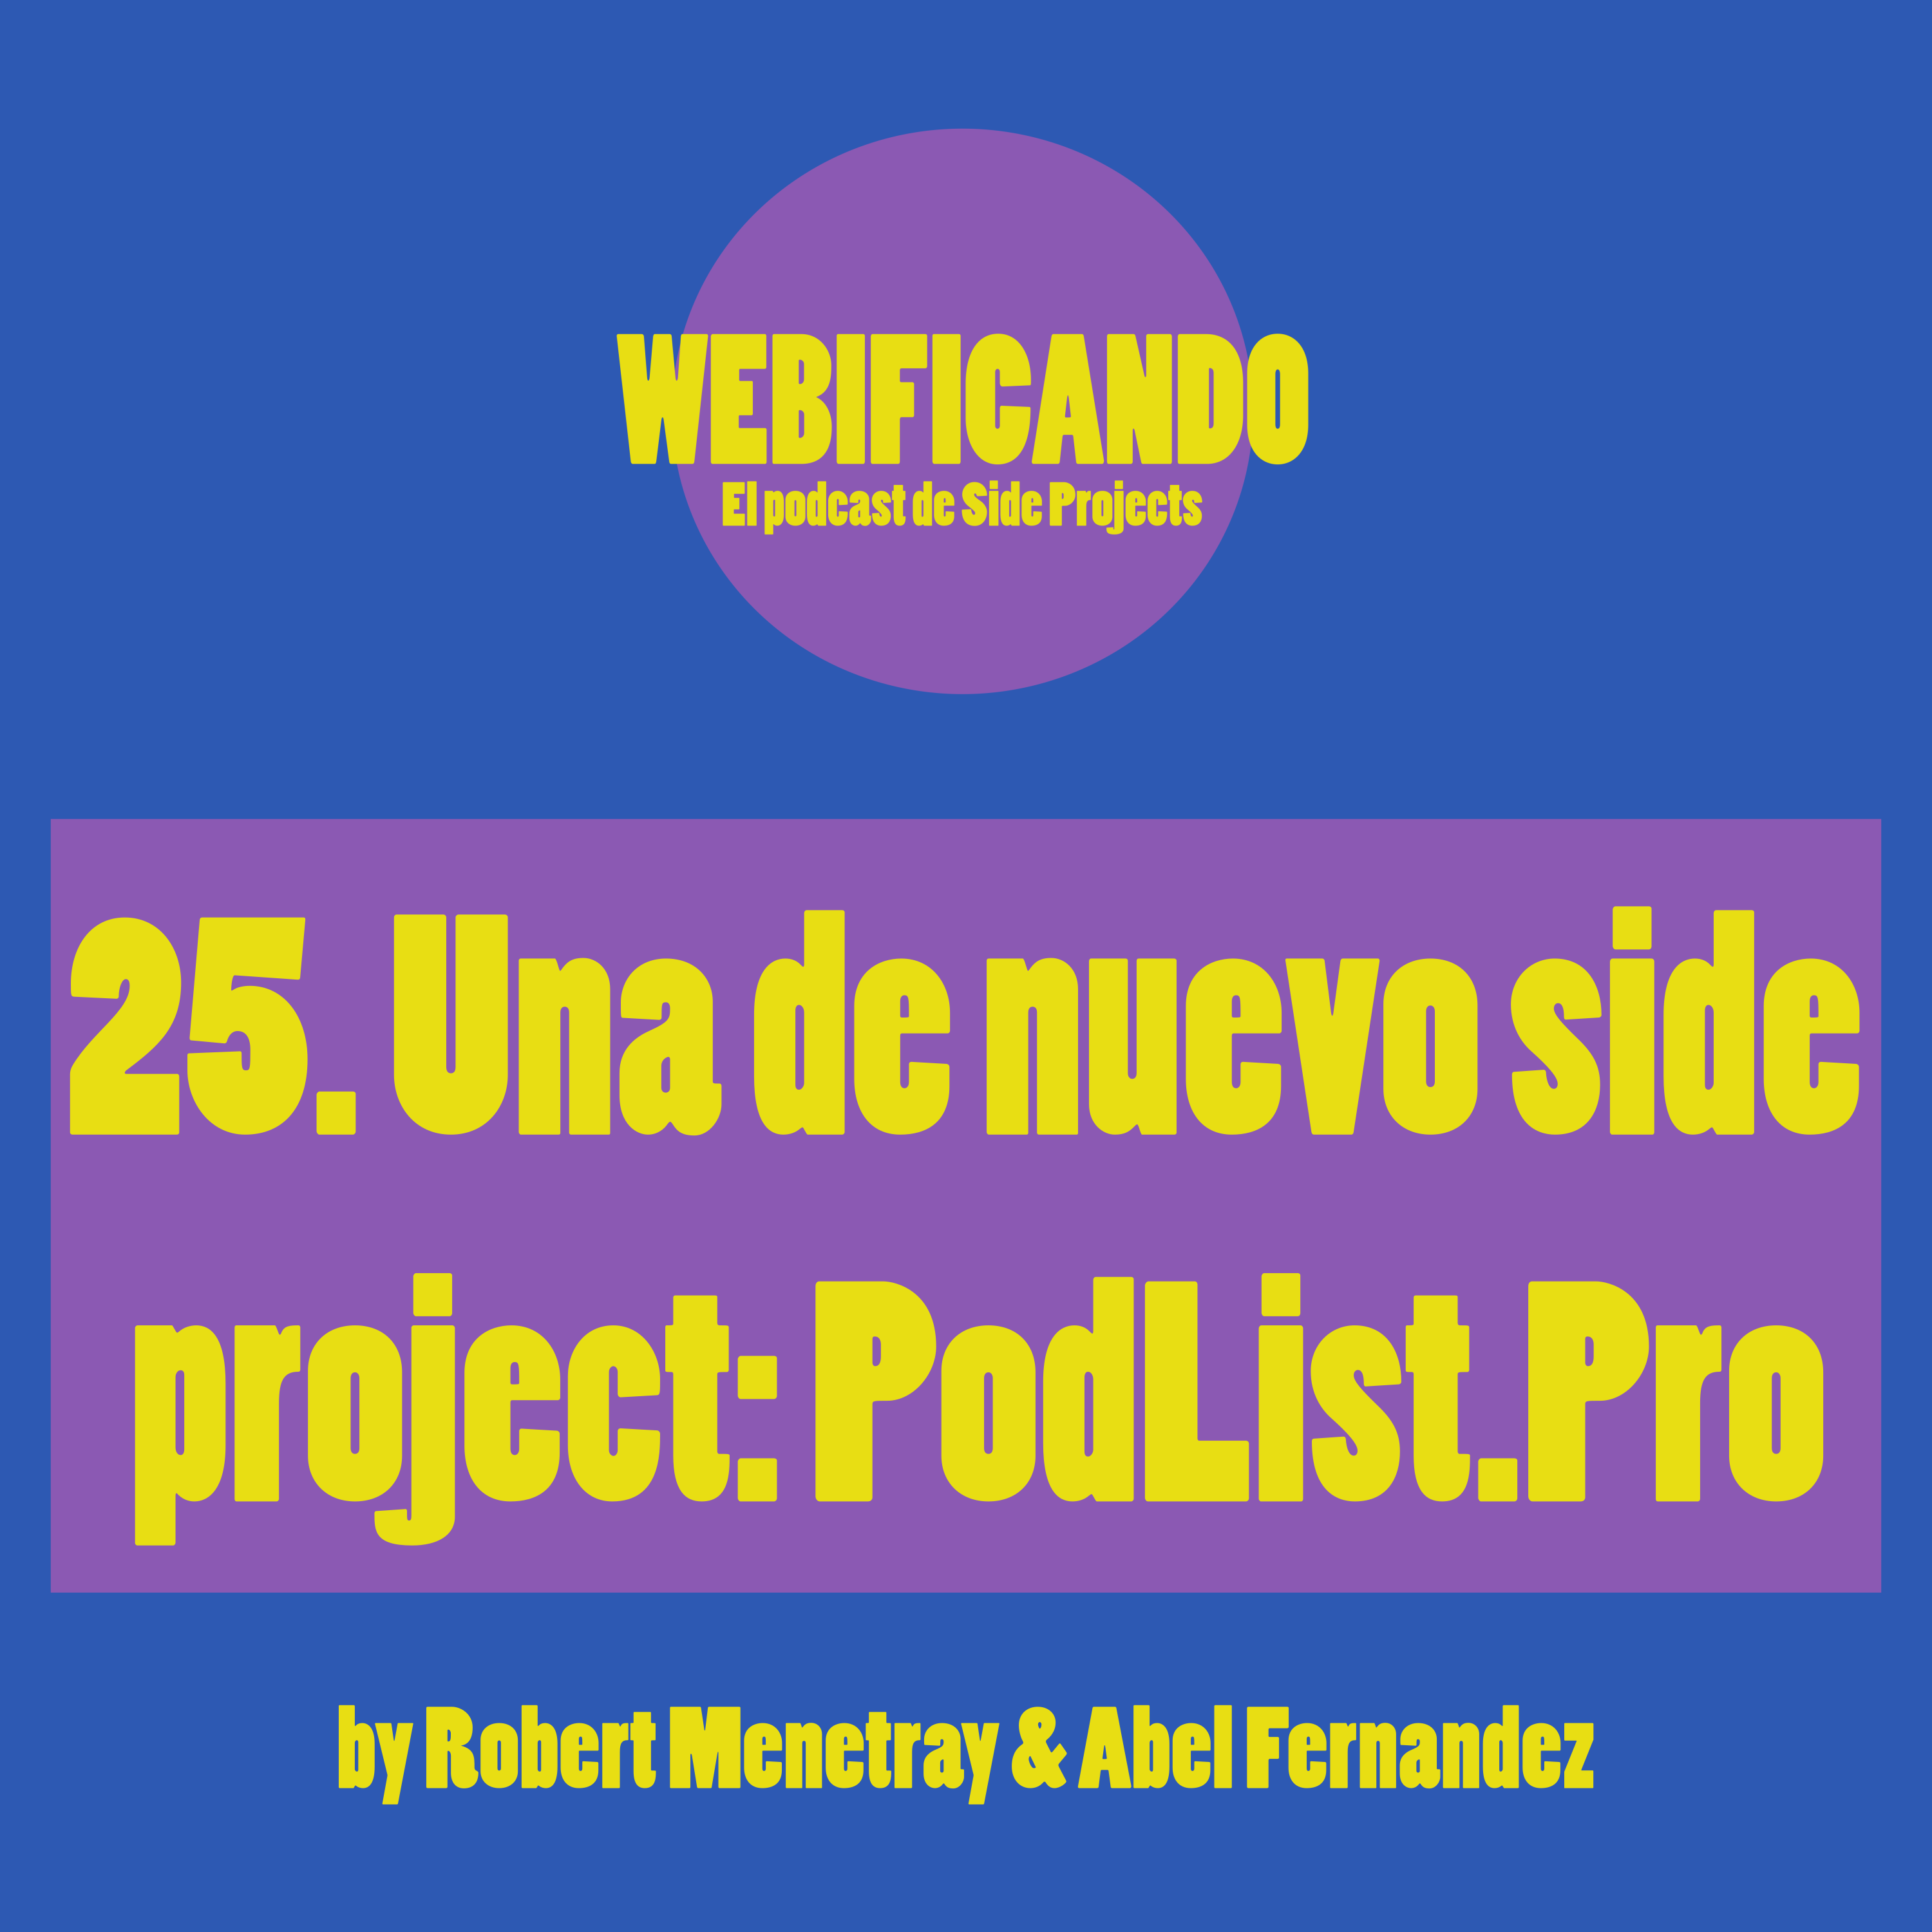 25. Una de nuevo side project: PodList.Pro